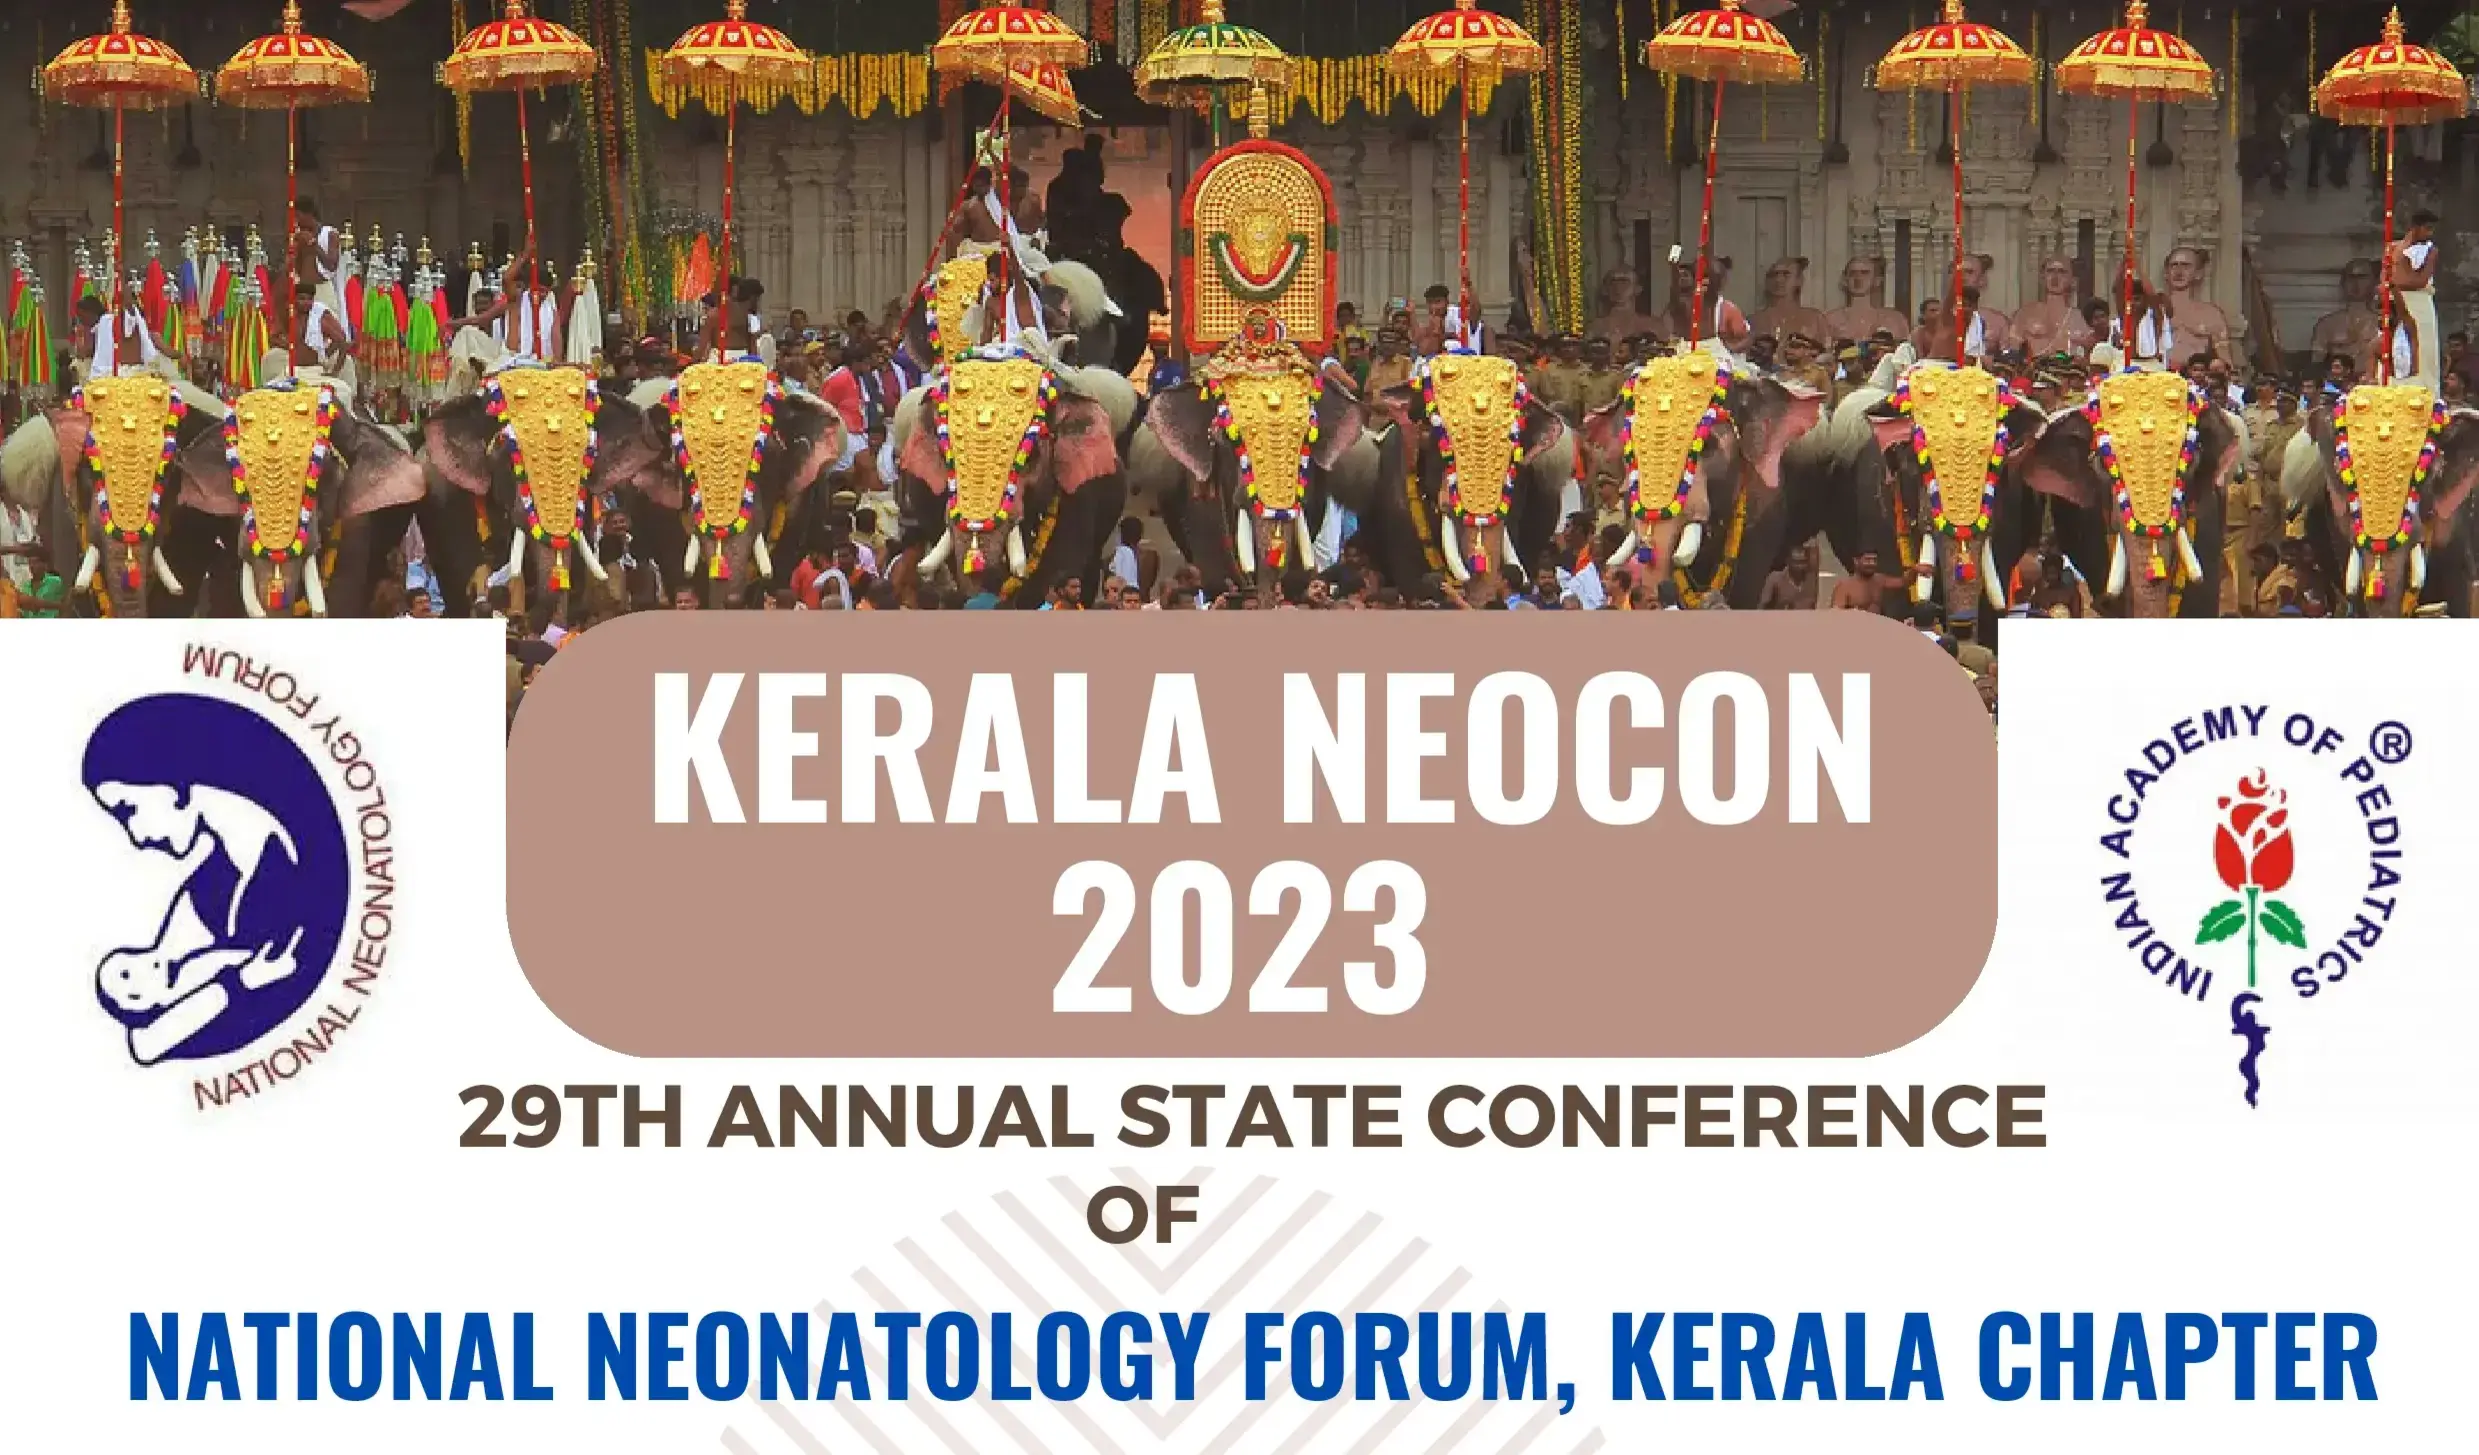 Kerala Neocon 2023 IAP KERALA